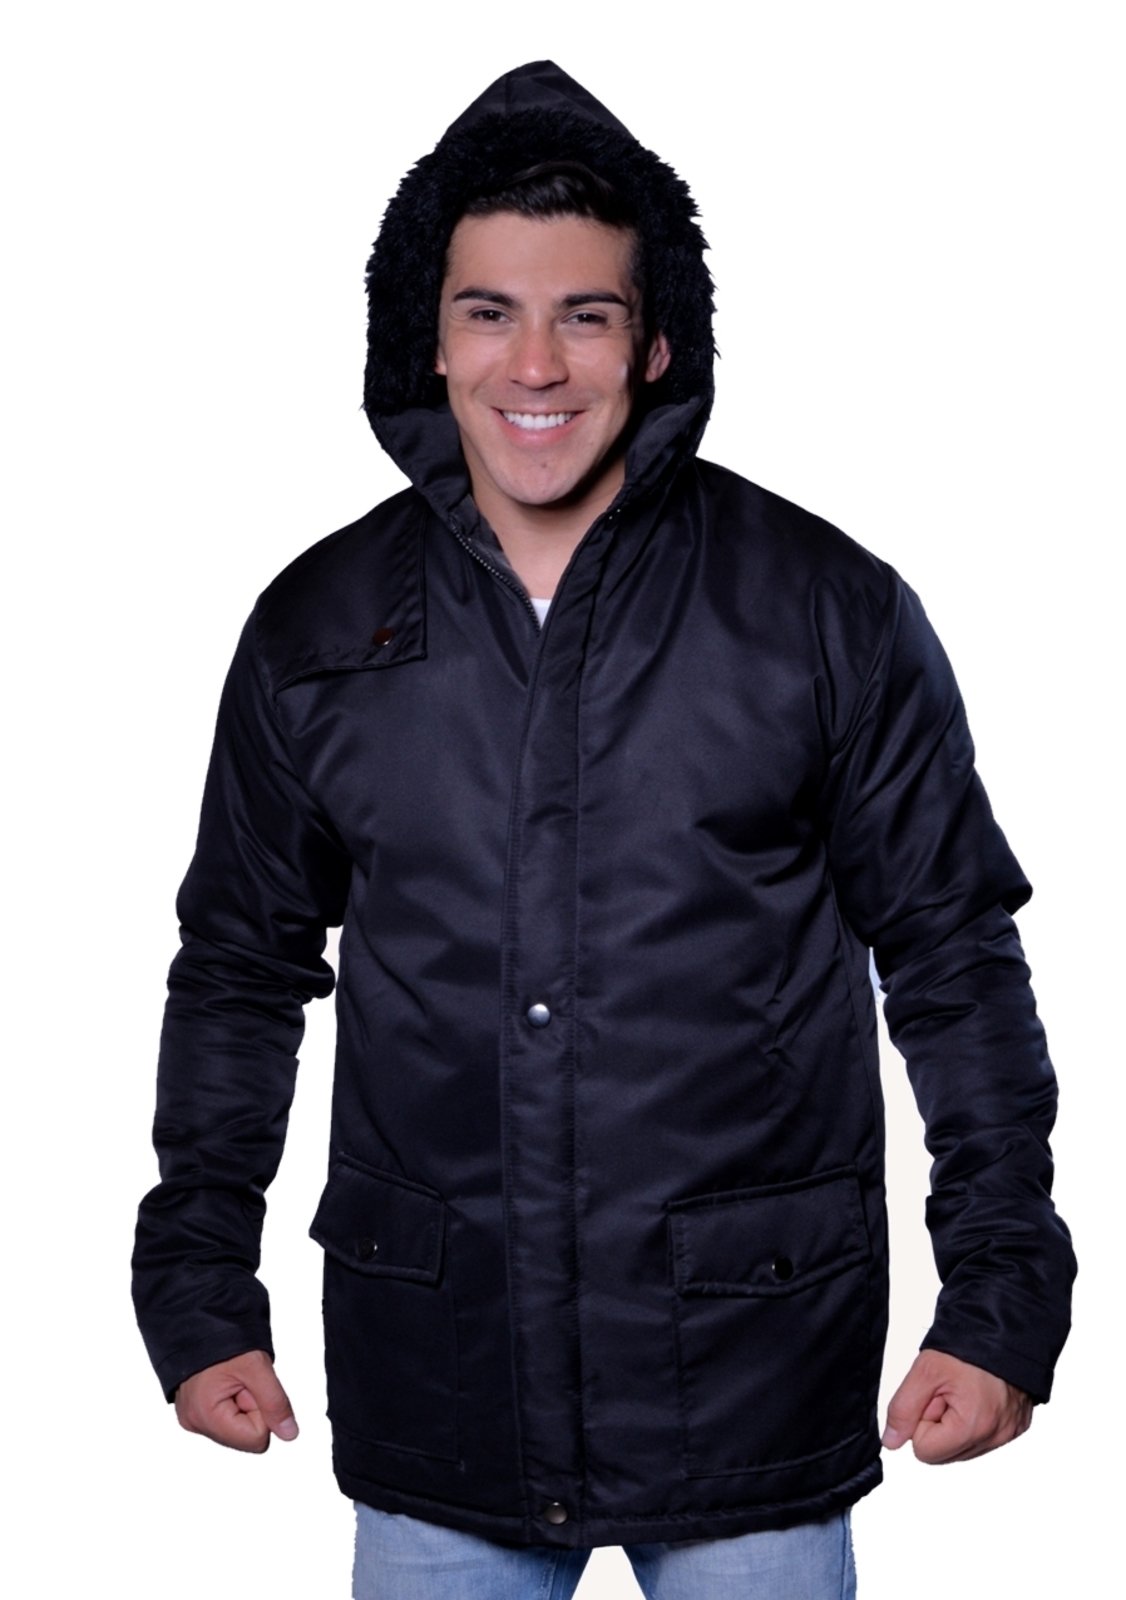 jaqueta impermeavel masculina com capuz